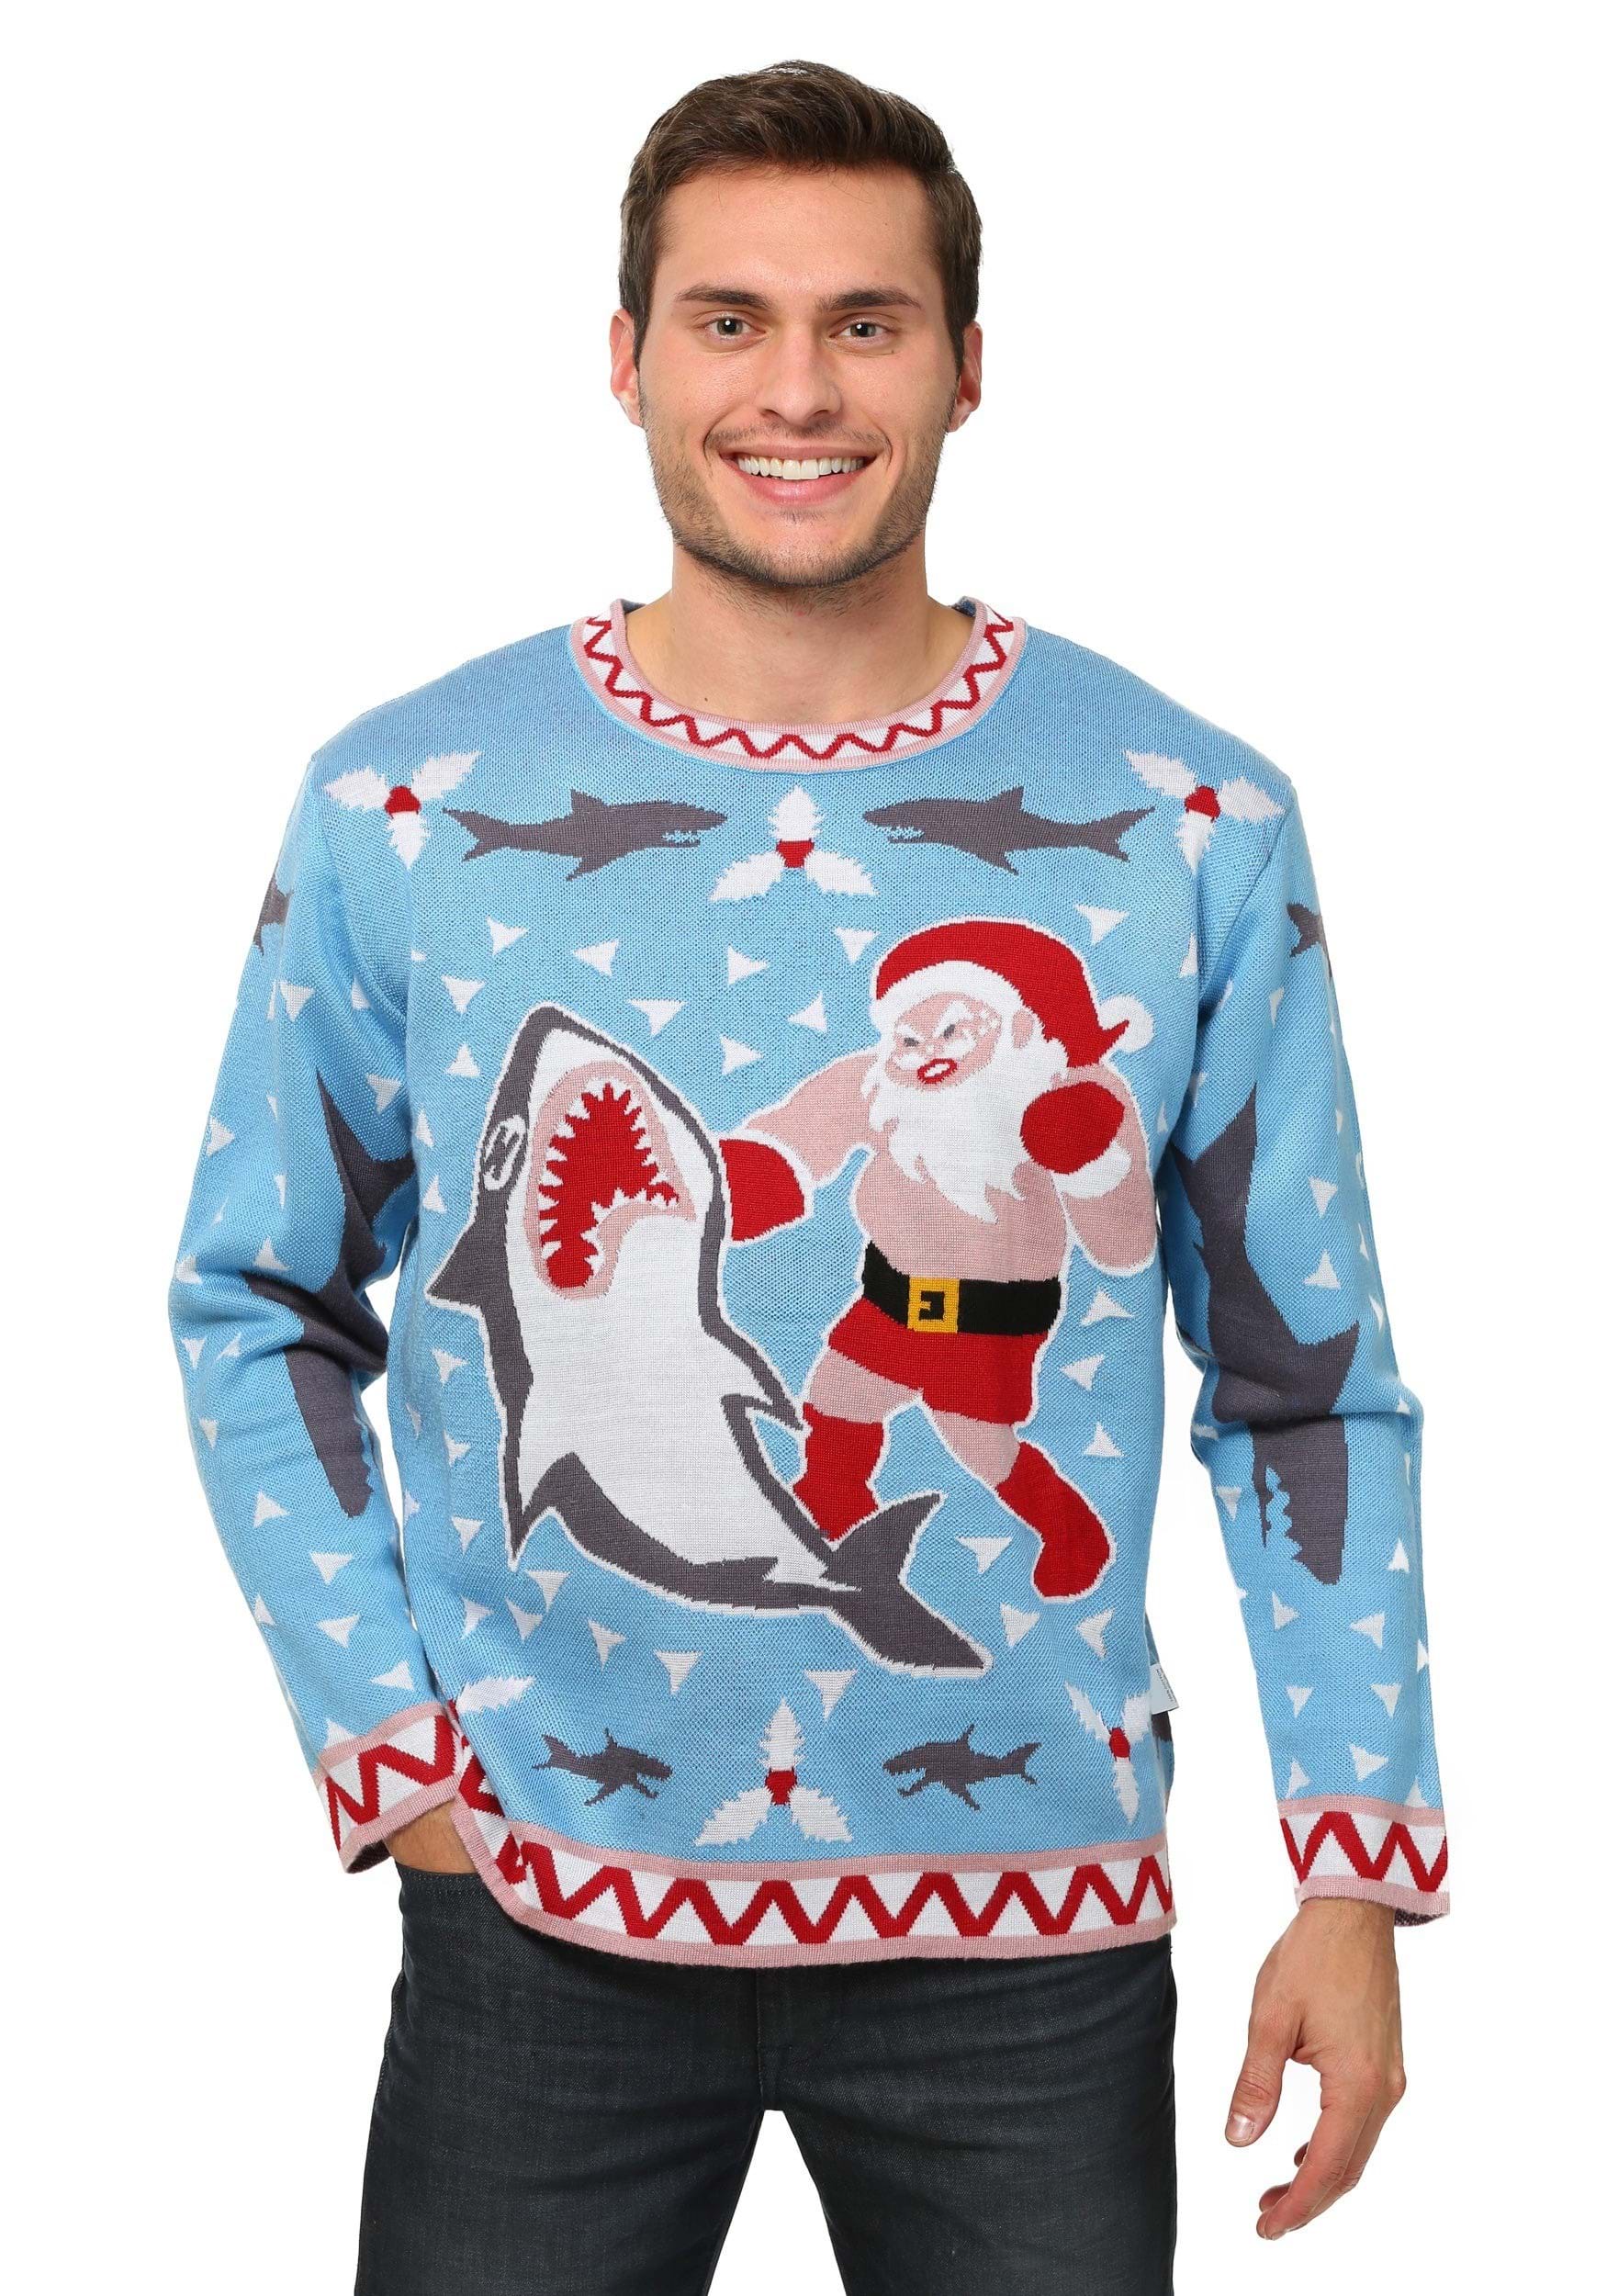 Christmas Shark Baby Shark Inspired Adults Christmas Jumper Sweatshirt 